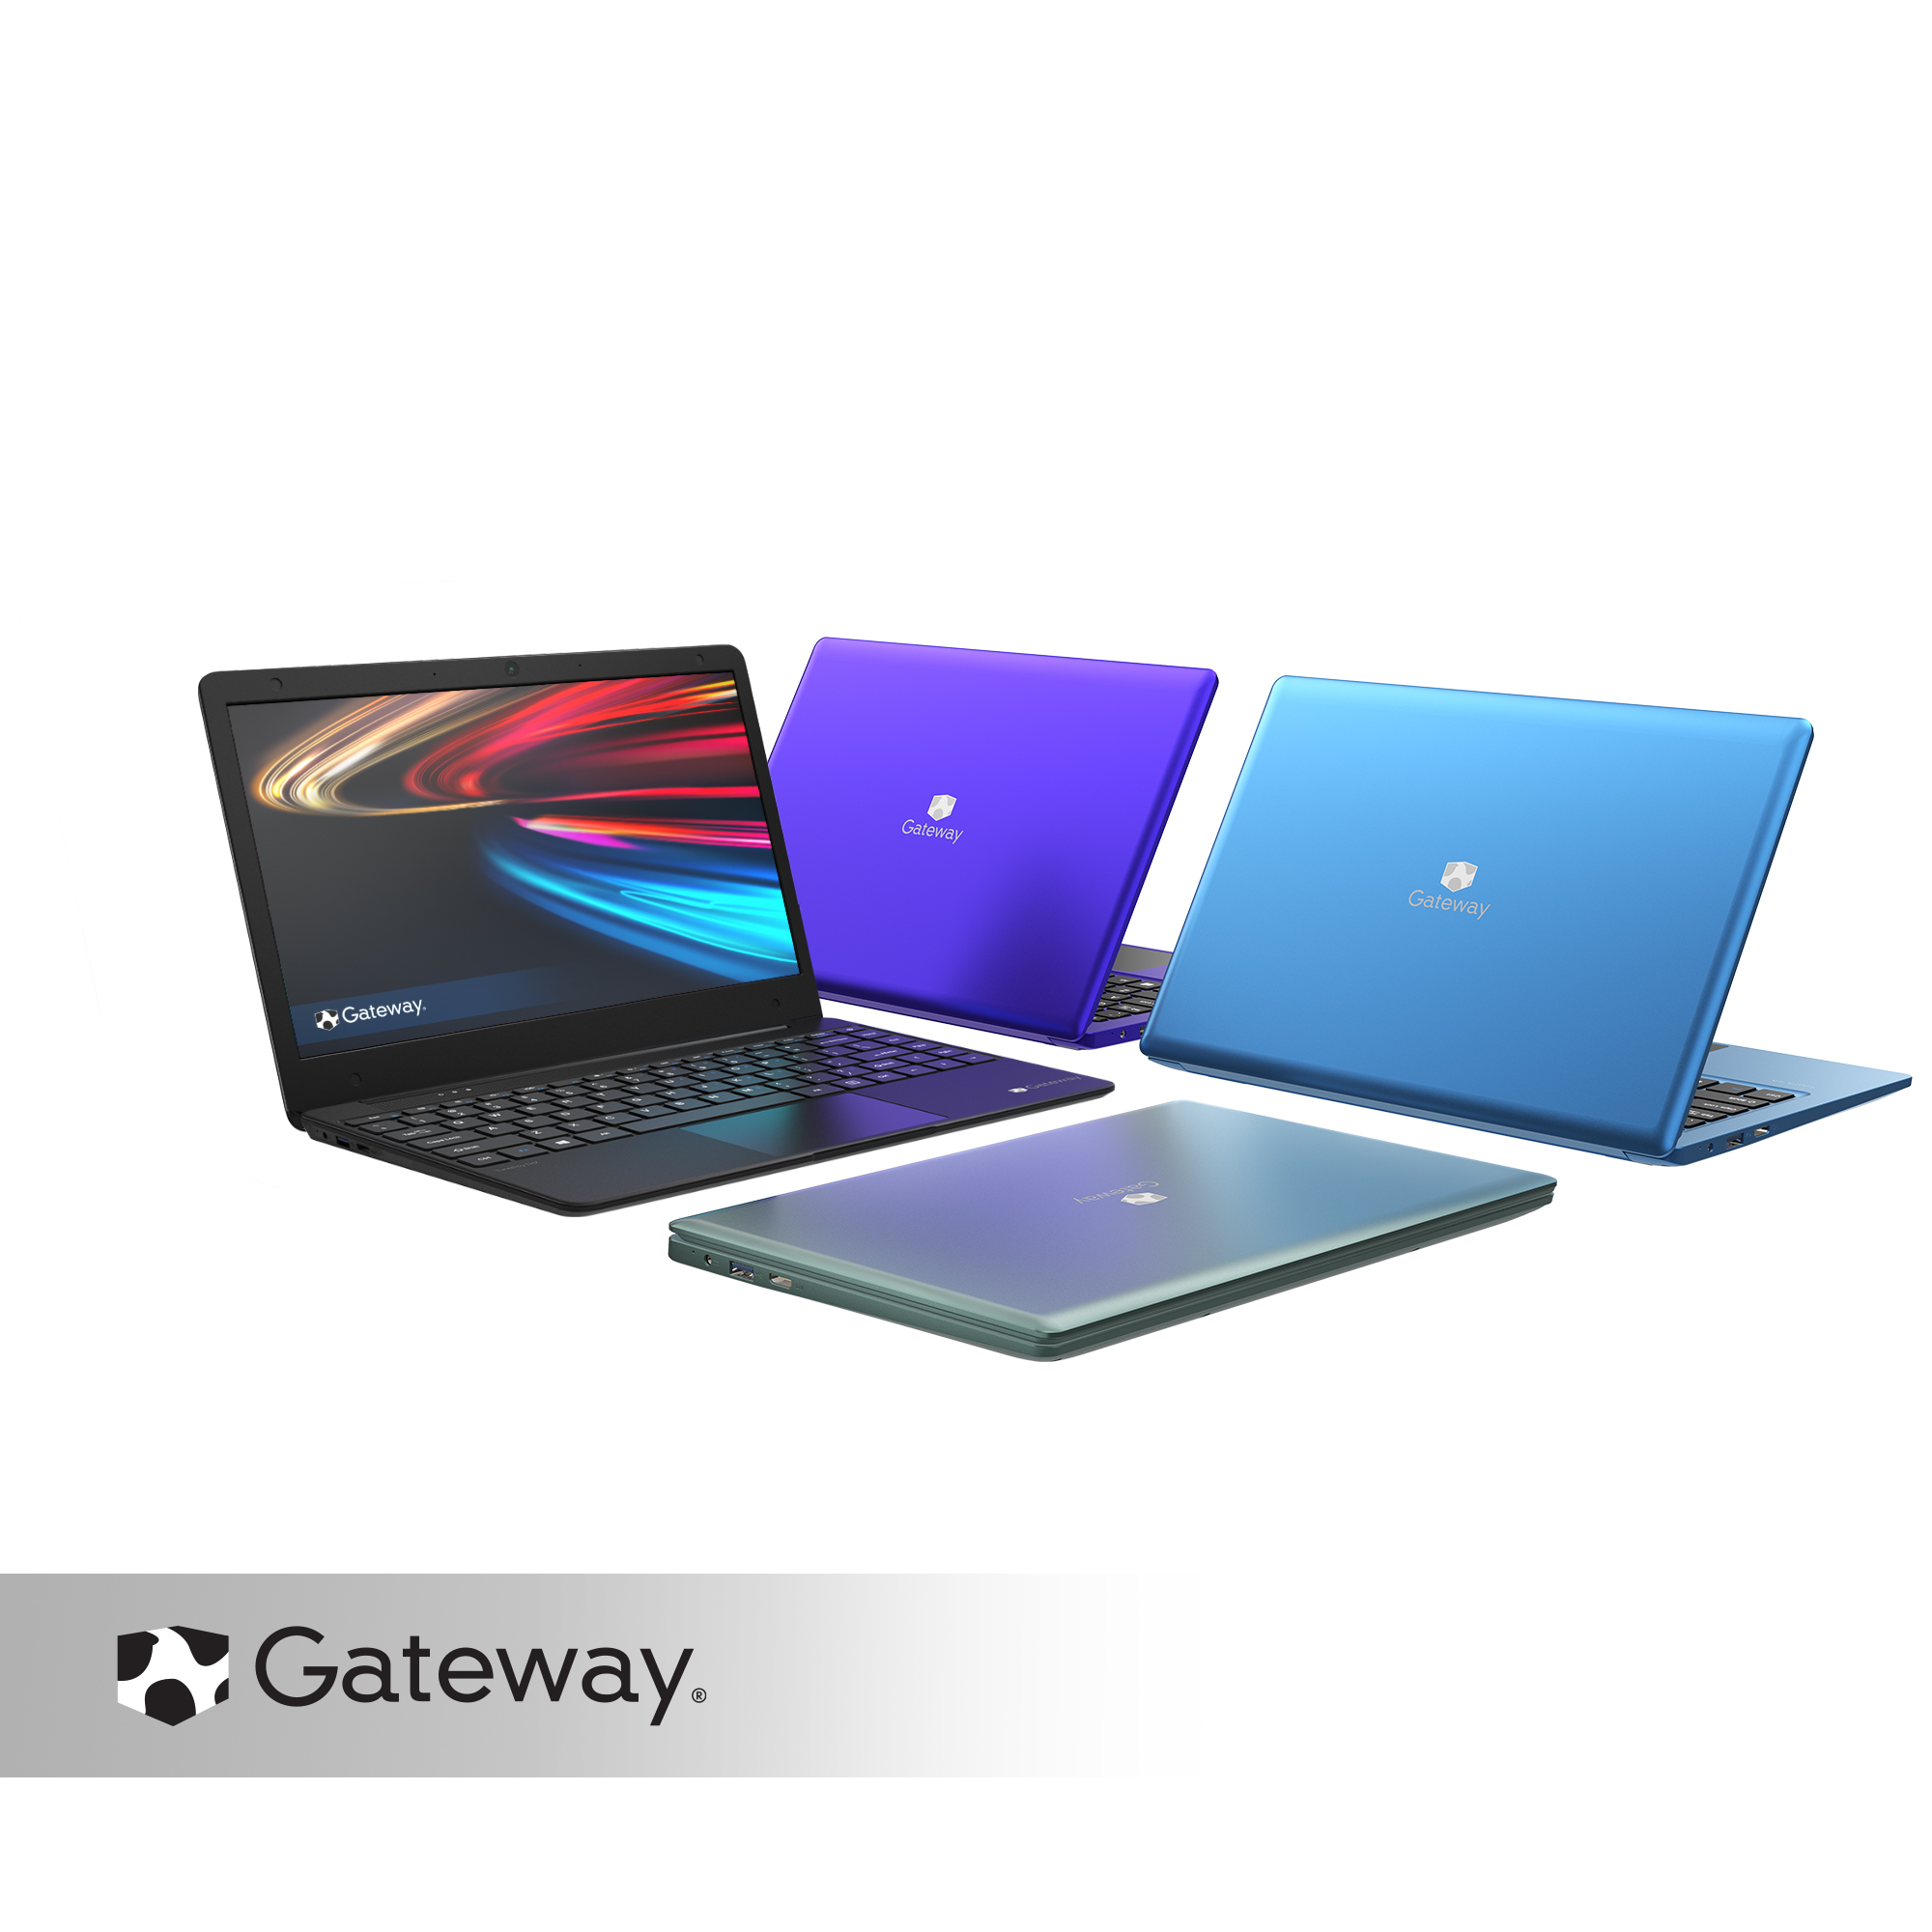 Gateway 14.1" FHD Ultra Slim Notebook, Intel Celeron, 4GB RAM, 64GB Storage, Tuned by THX Display & Audio, Mini HDMI, Webcam, Windows 10 S, Microsoft 365 Personal 1-Year Included - image 2 of 4